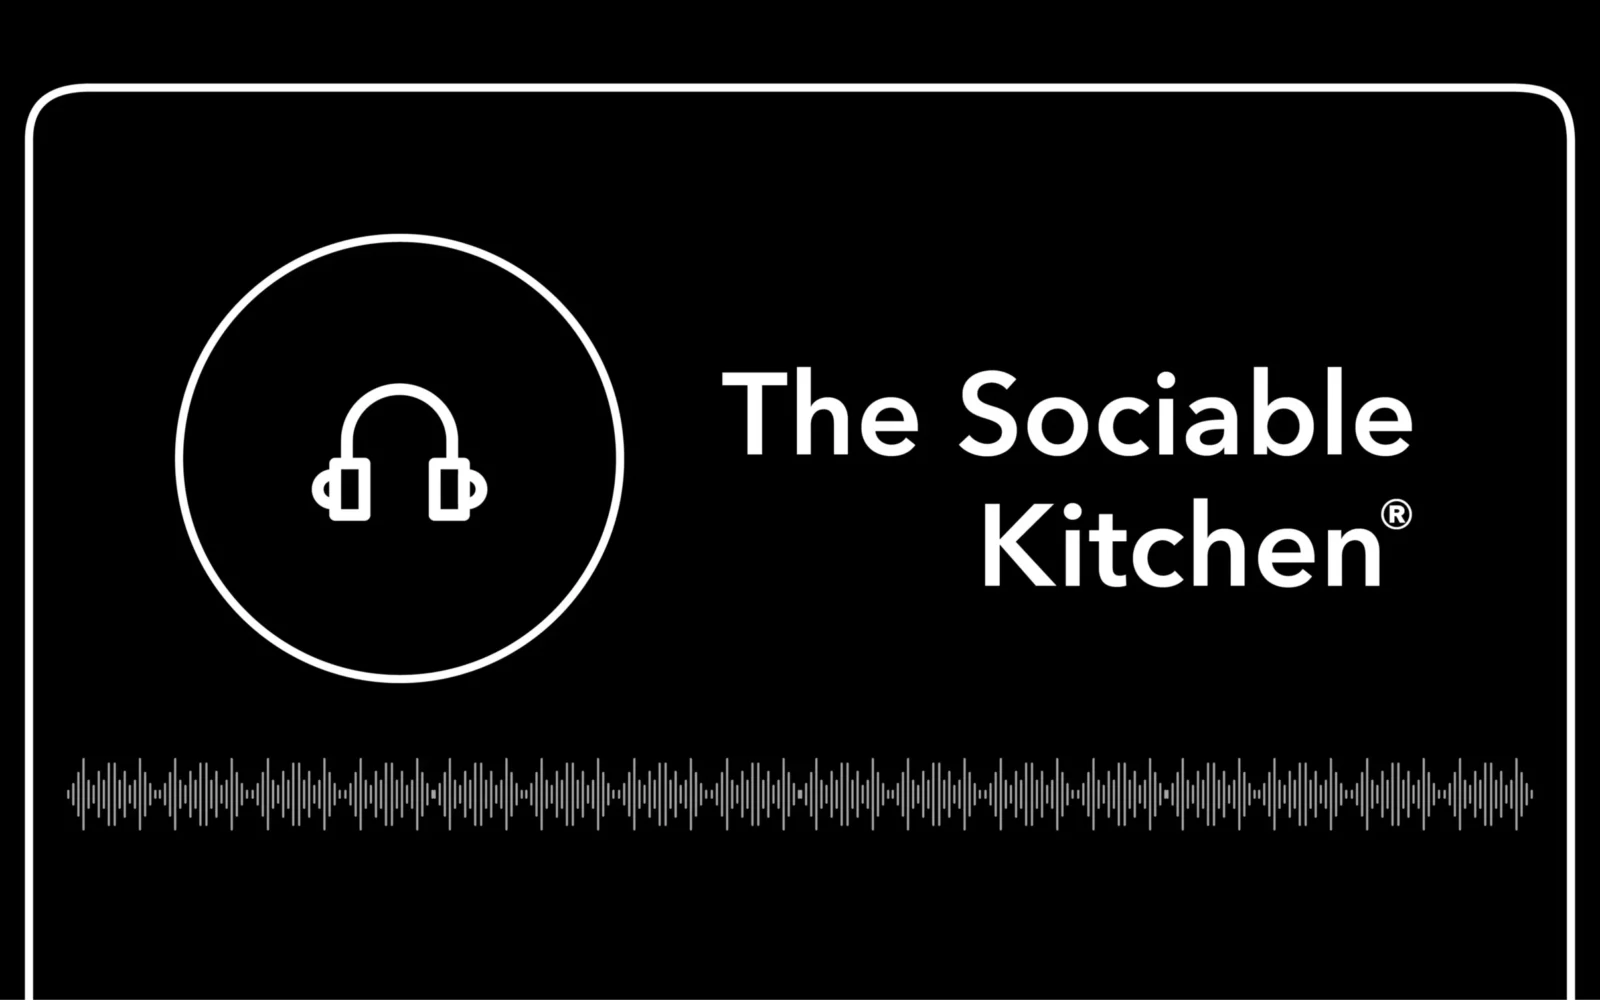 kvik and the sociable kitchen